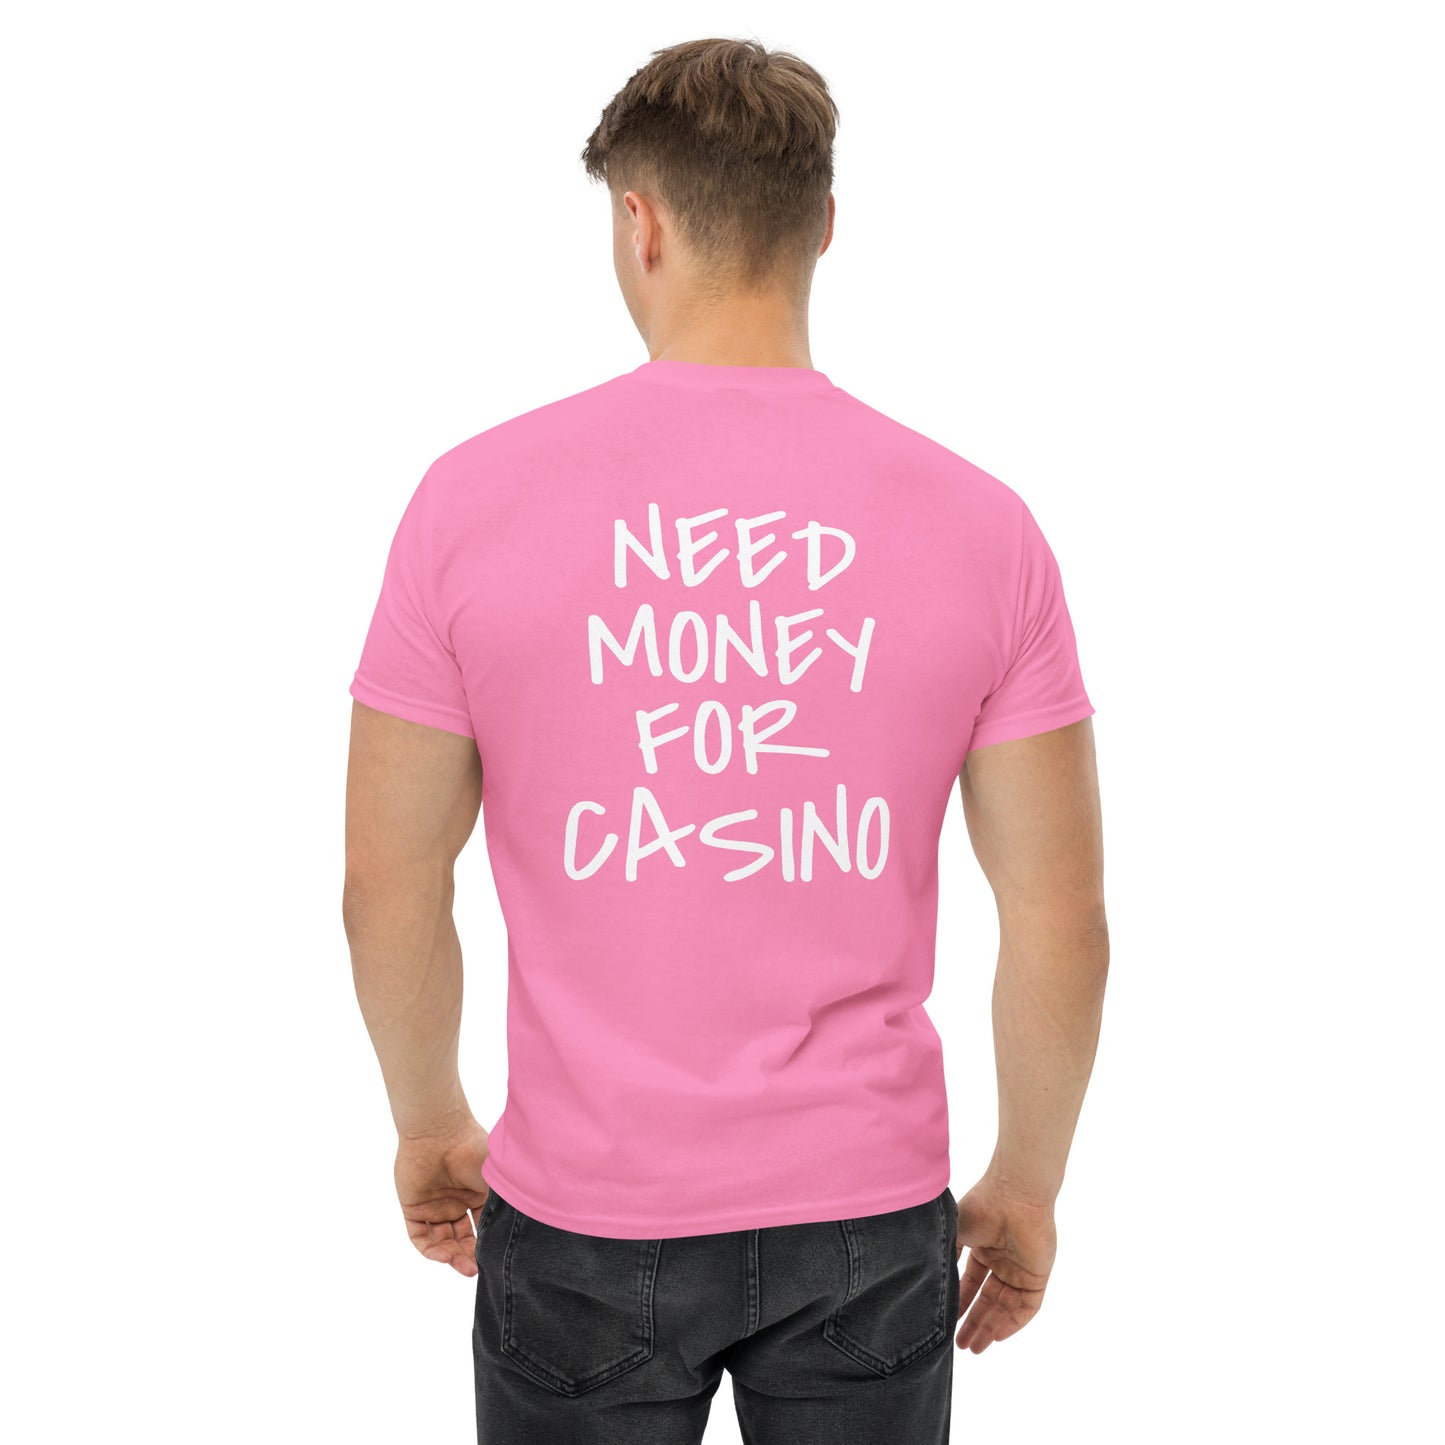 NEED MONEY FOR CASINO T-Shirt [BACKPRINT]